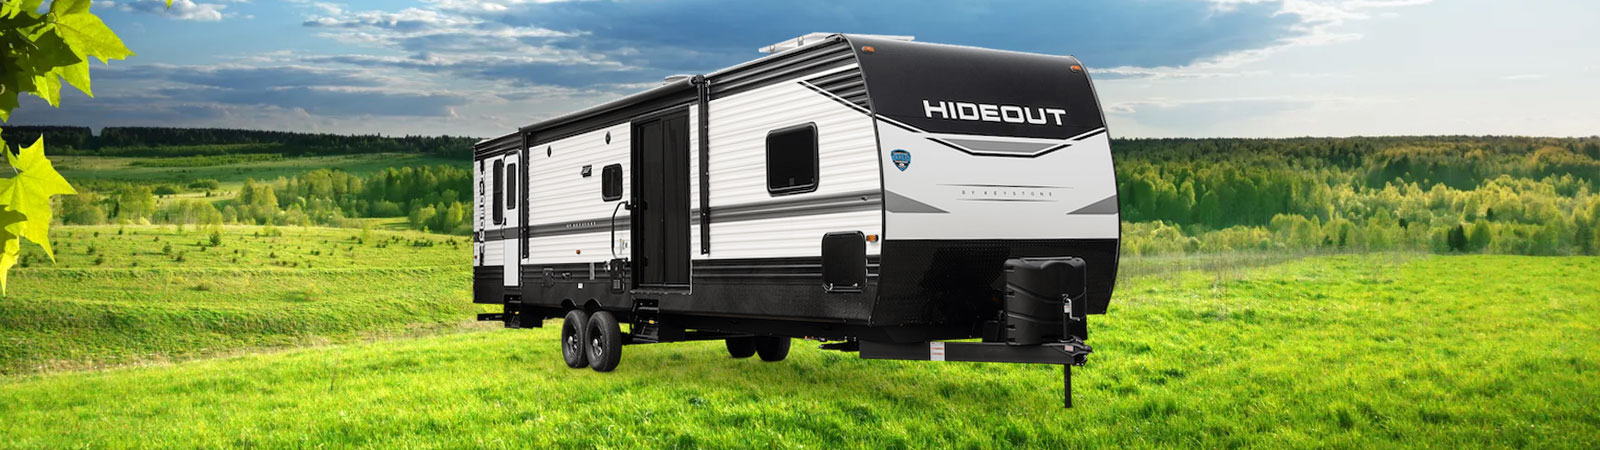 New Keystone RV Hideout comfort travel trailers for sale in Beloit Kansas USA